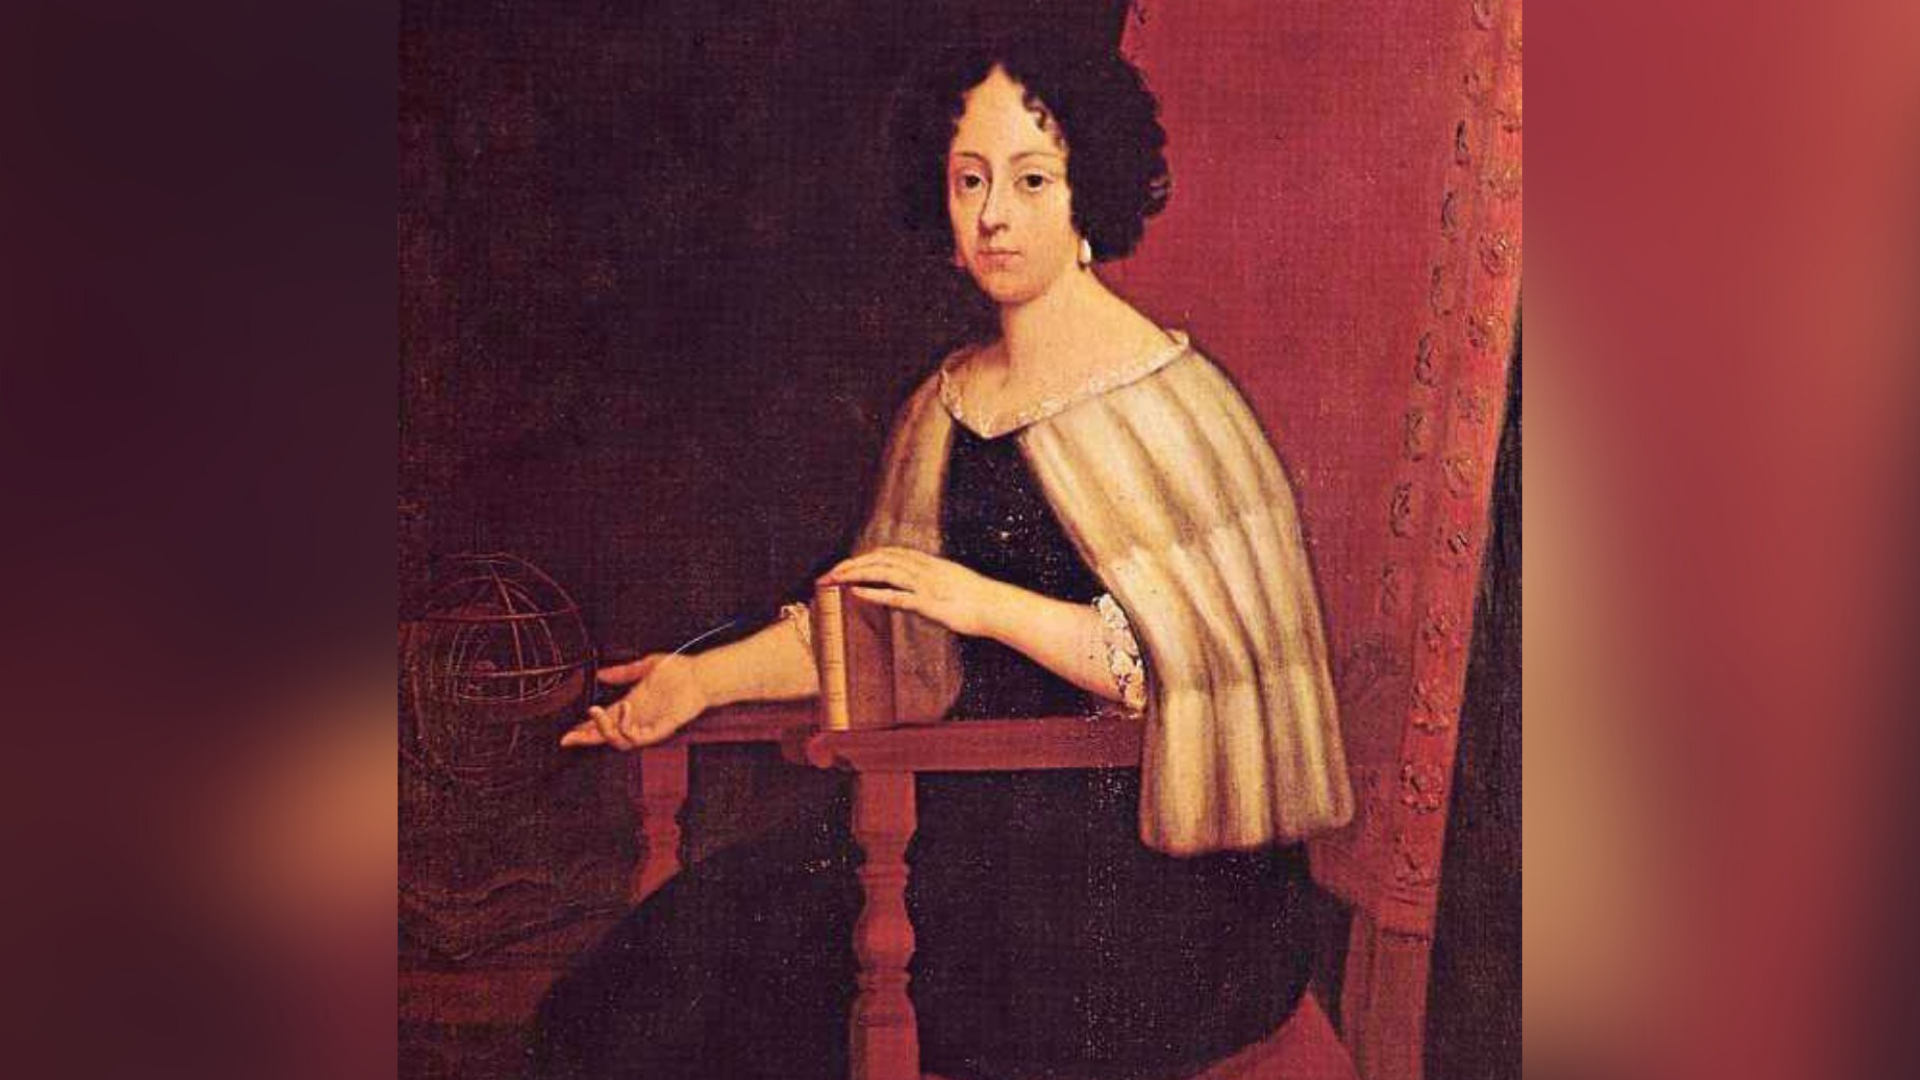 Elena Lucrezia Cornaro Piscopia was the first woman in the world to receive a PhD